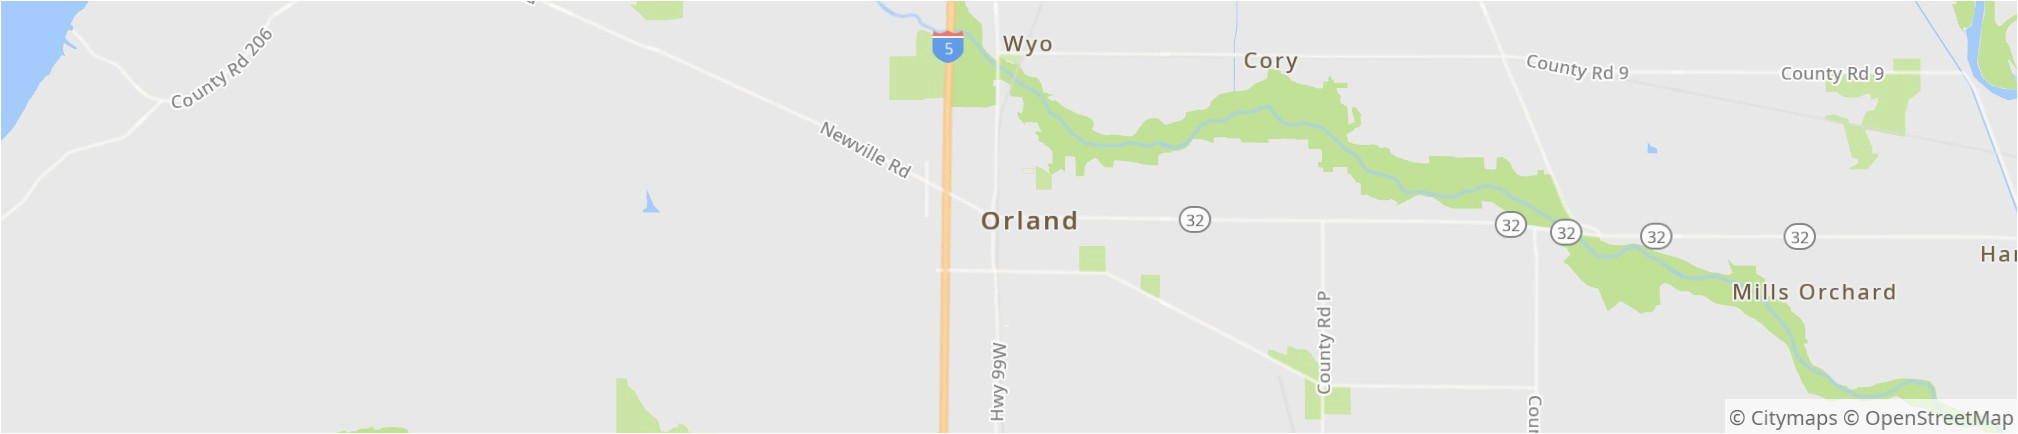 Orland California Map orland 2019 Best Of orland Ca tourism Tripadvisor